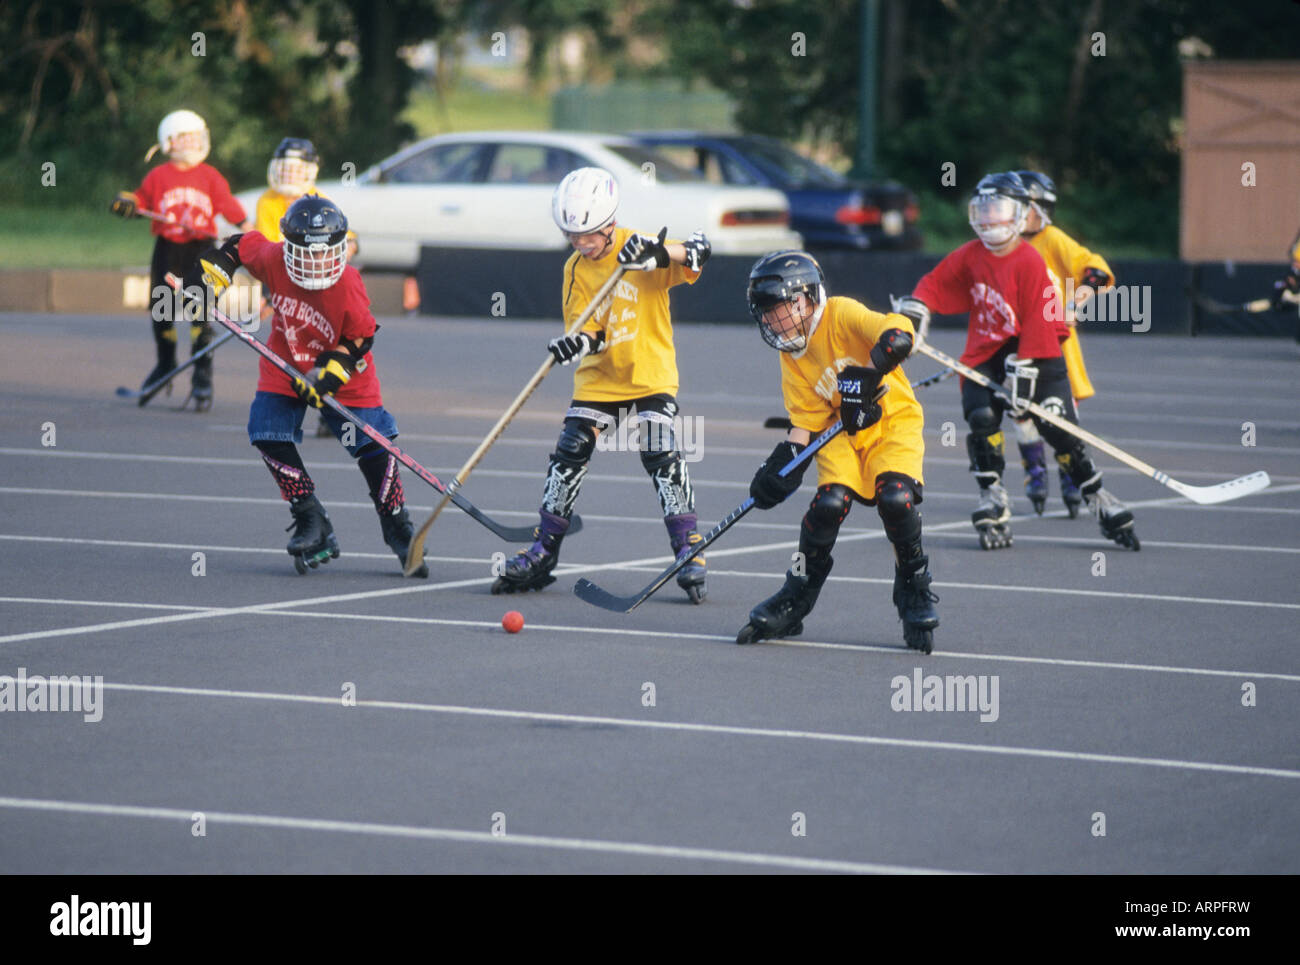 Roller hockey or street hockey, youth league, proper safety gear, sports Ohio USA skates playground Stock Photo